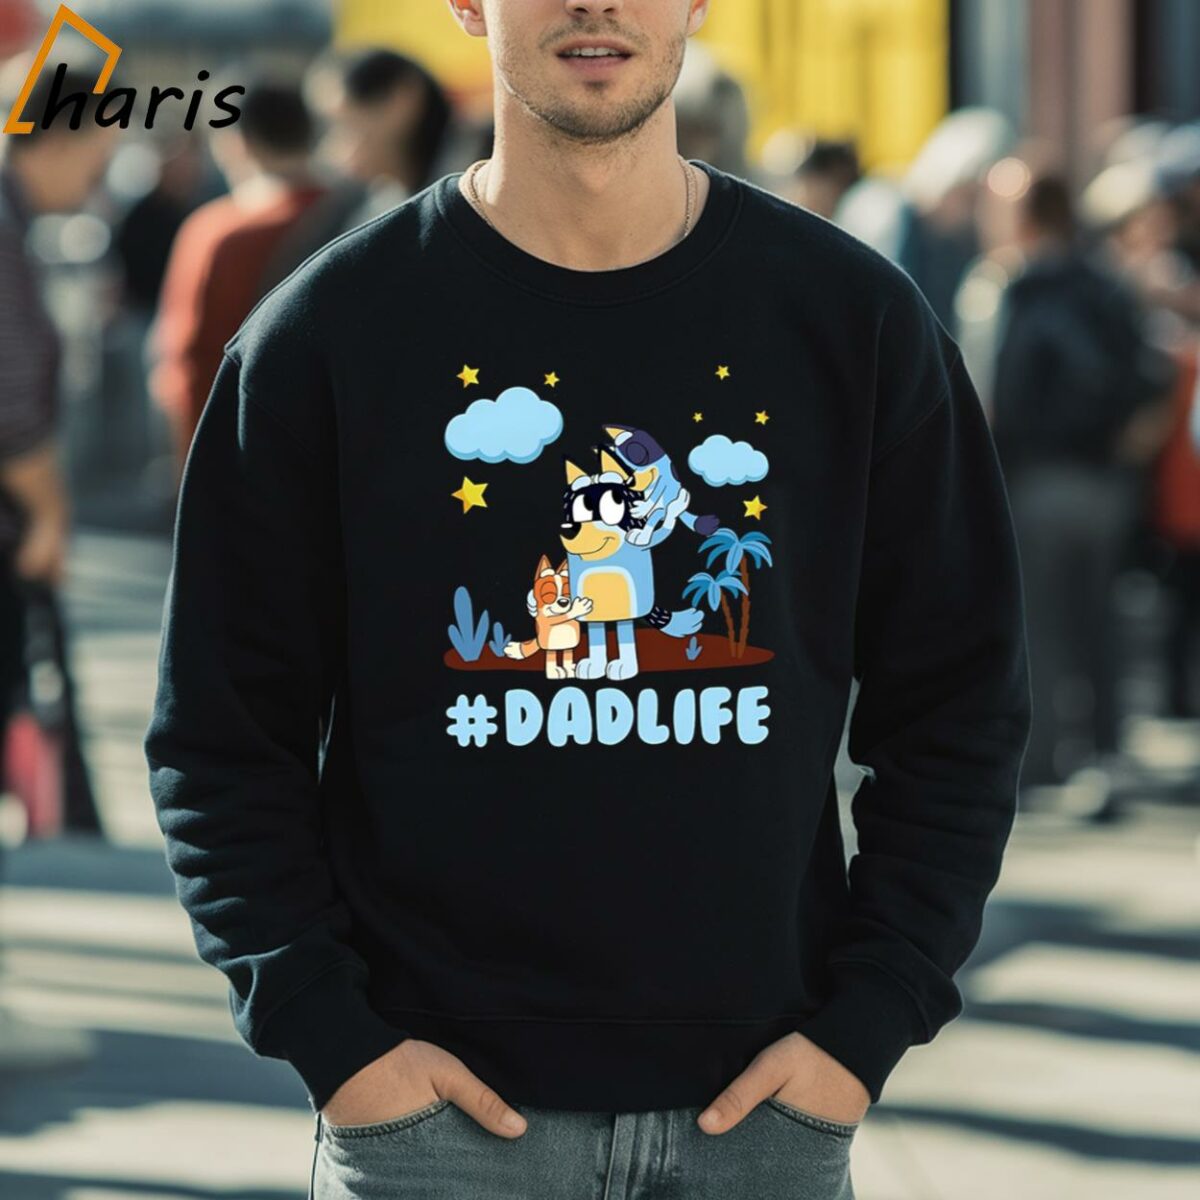 Bluey Dadlife Funny Gift for Camping Crew Dad Shirt 5 sweatshirt